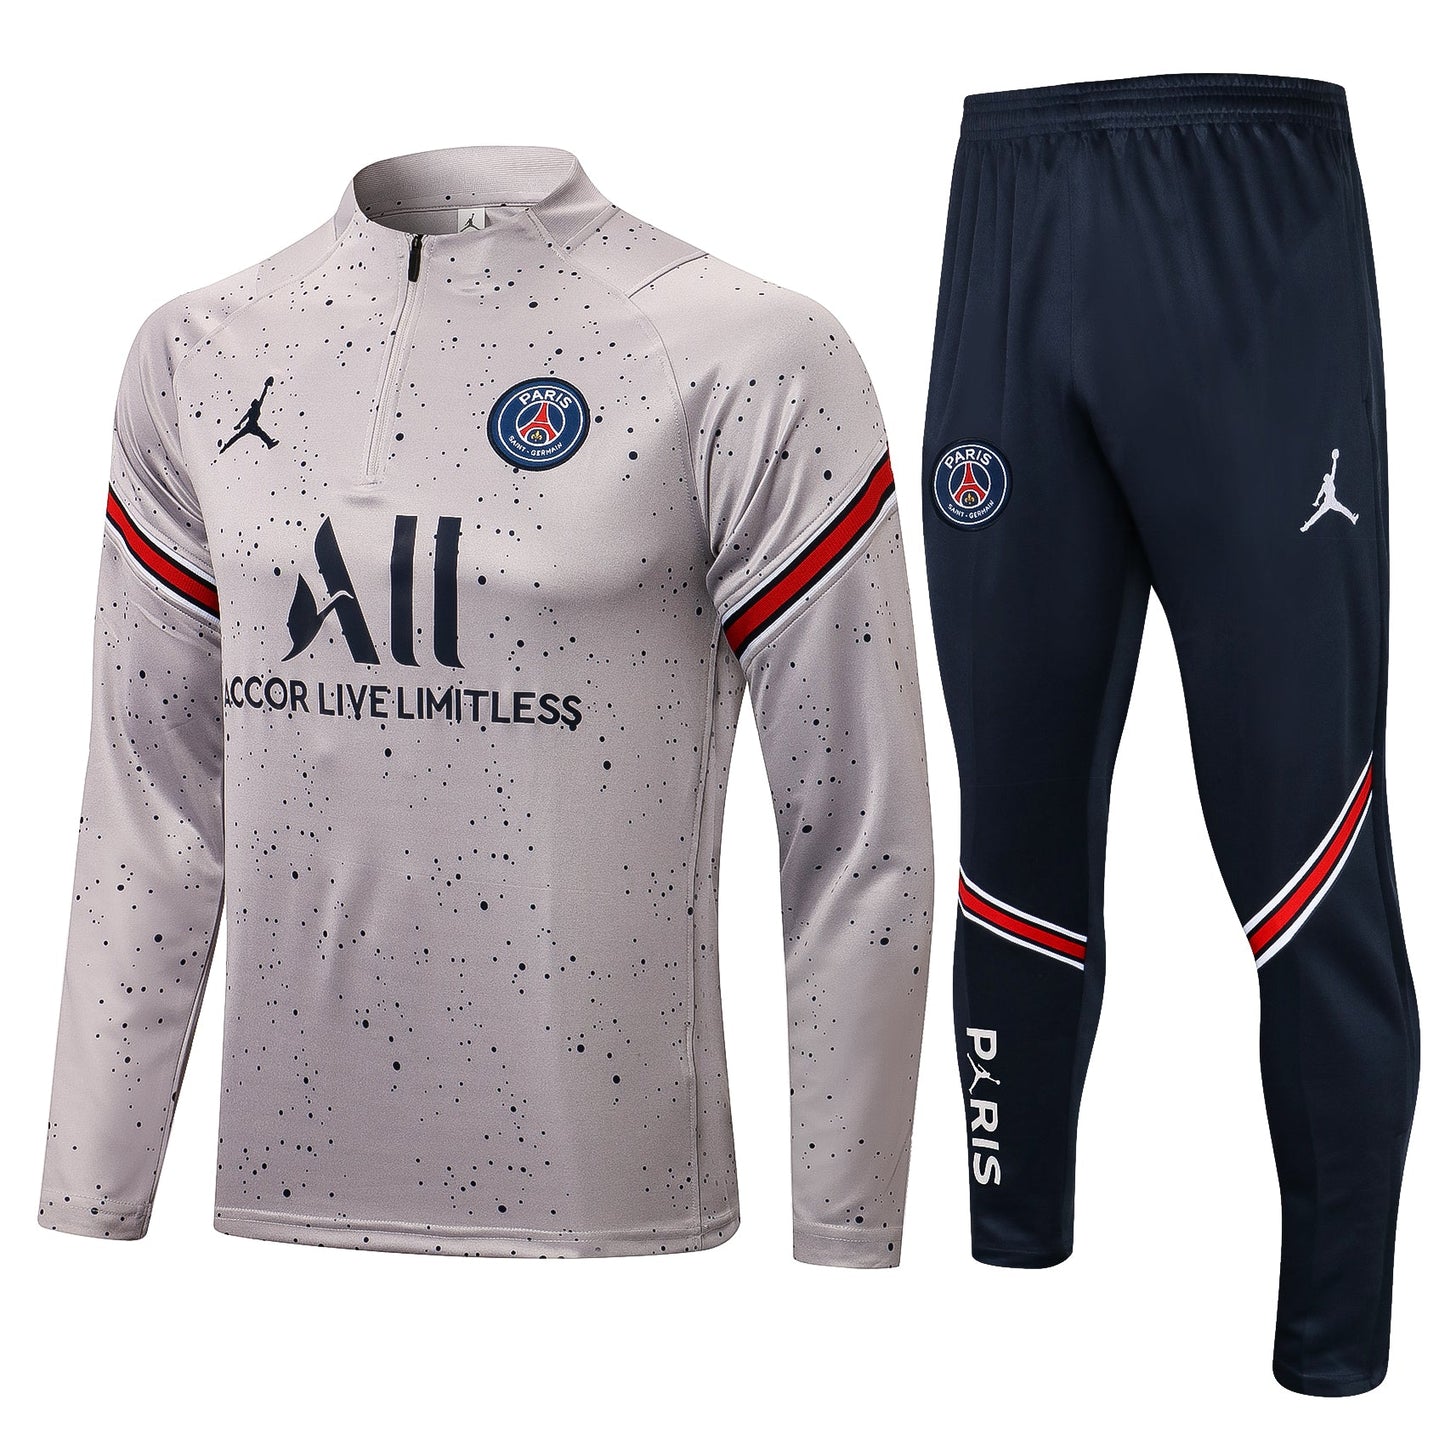 PSG x Jordan 2021-22 training kit - fleece and joggers included